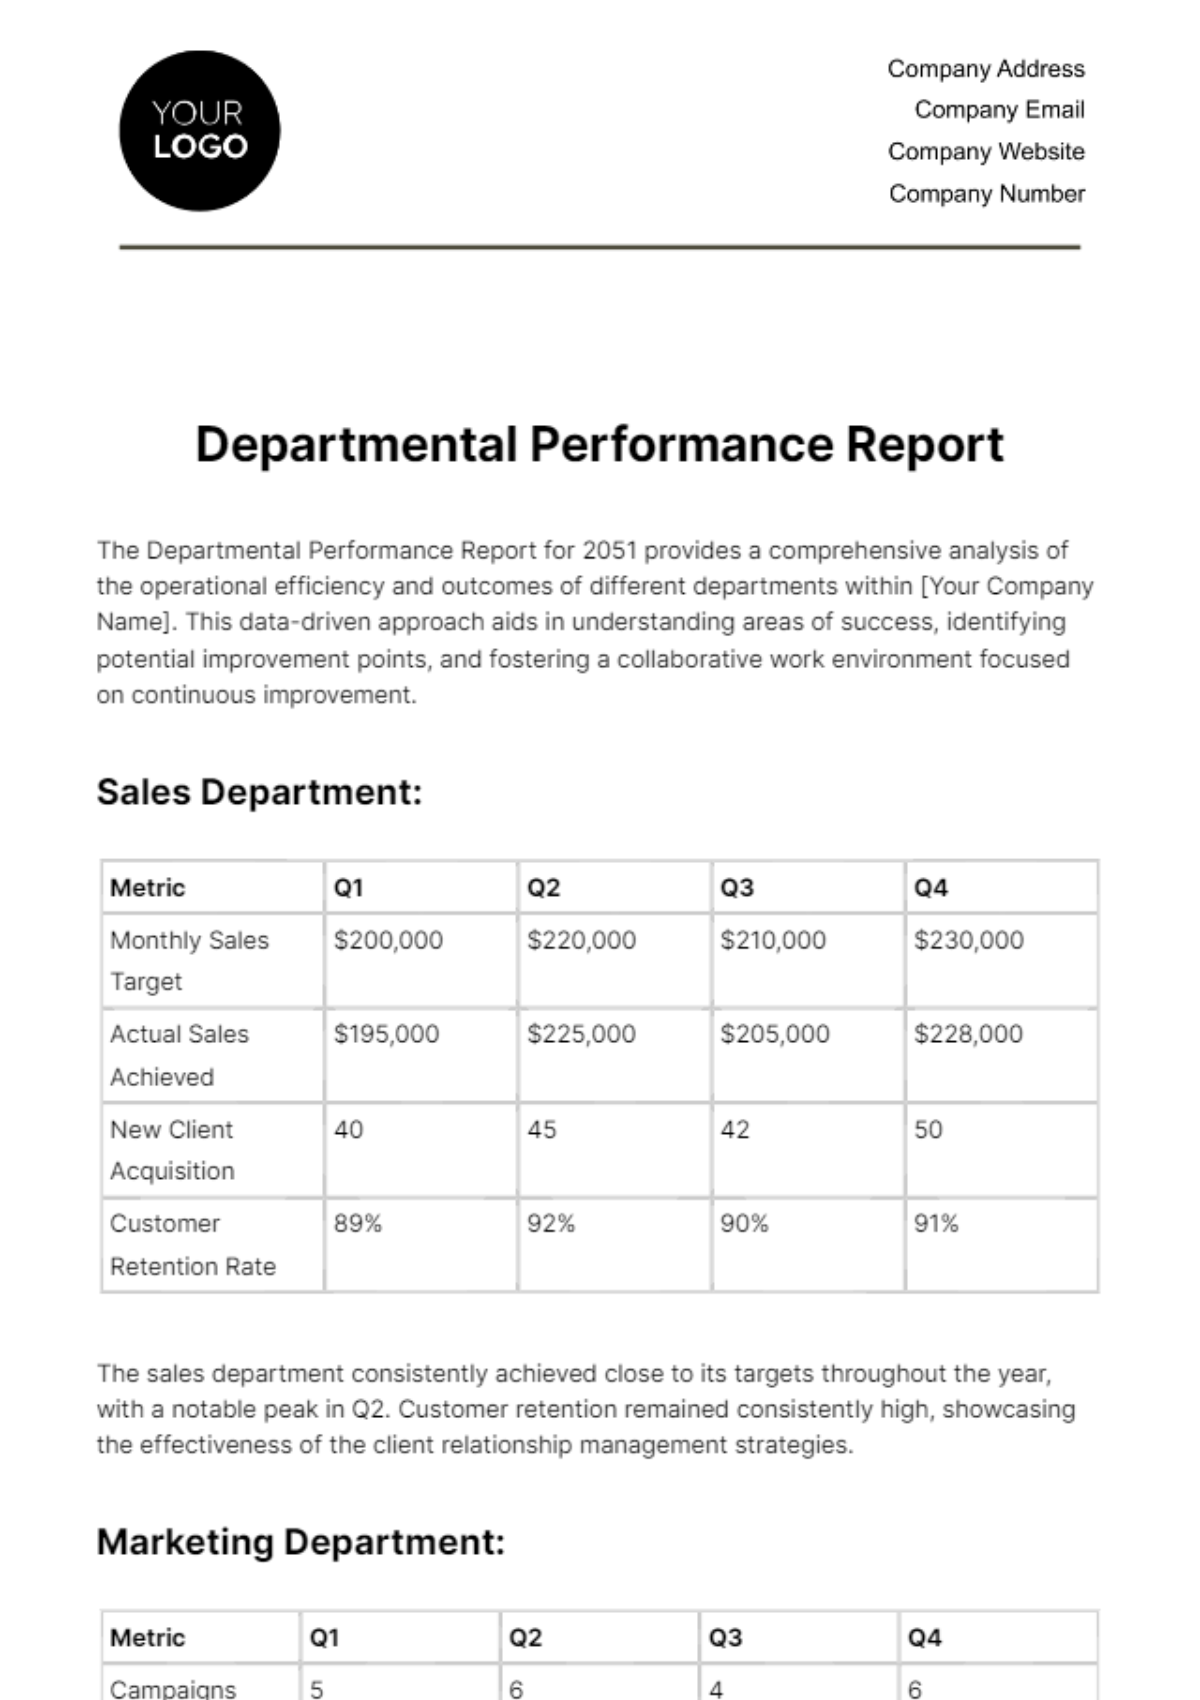 Free Departmental Performance Report HR Template